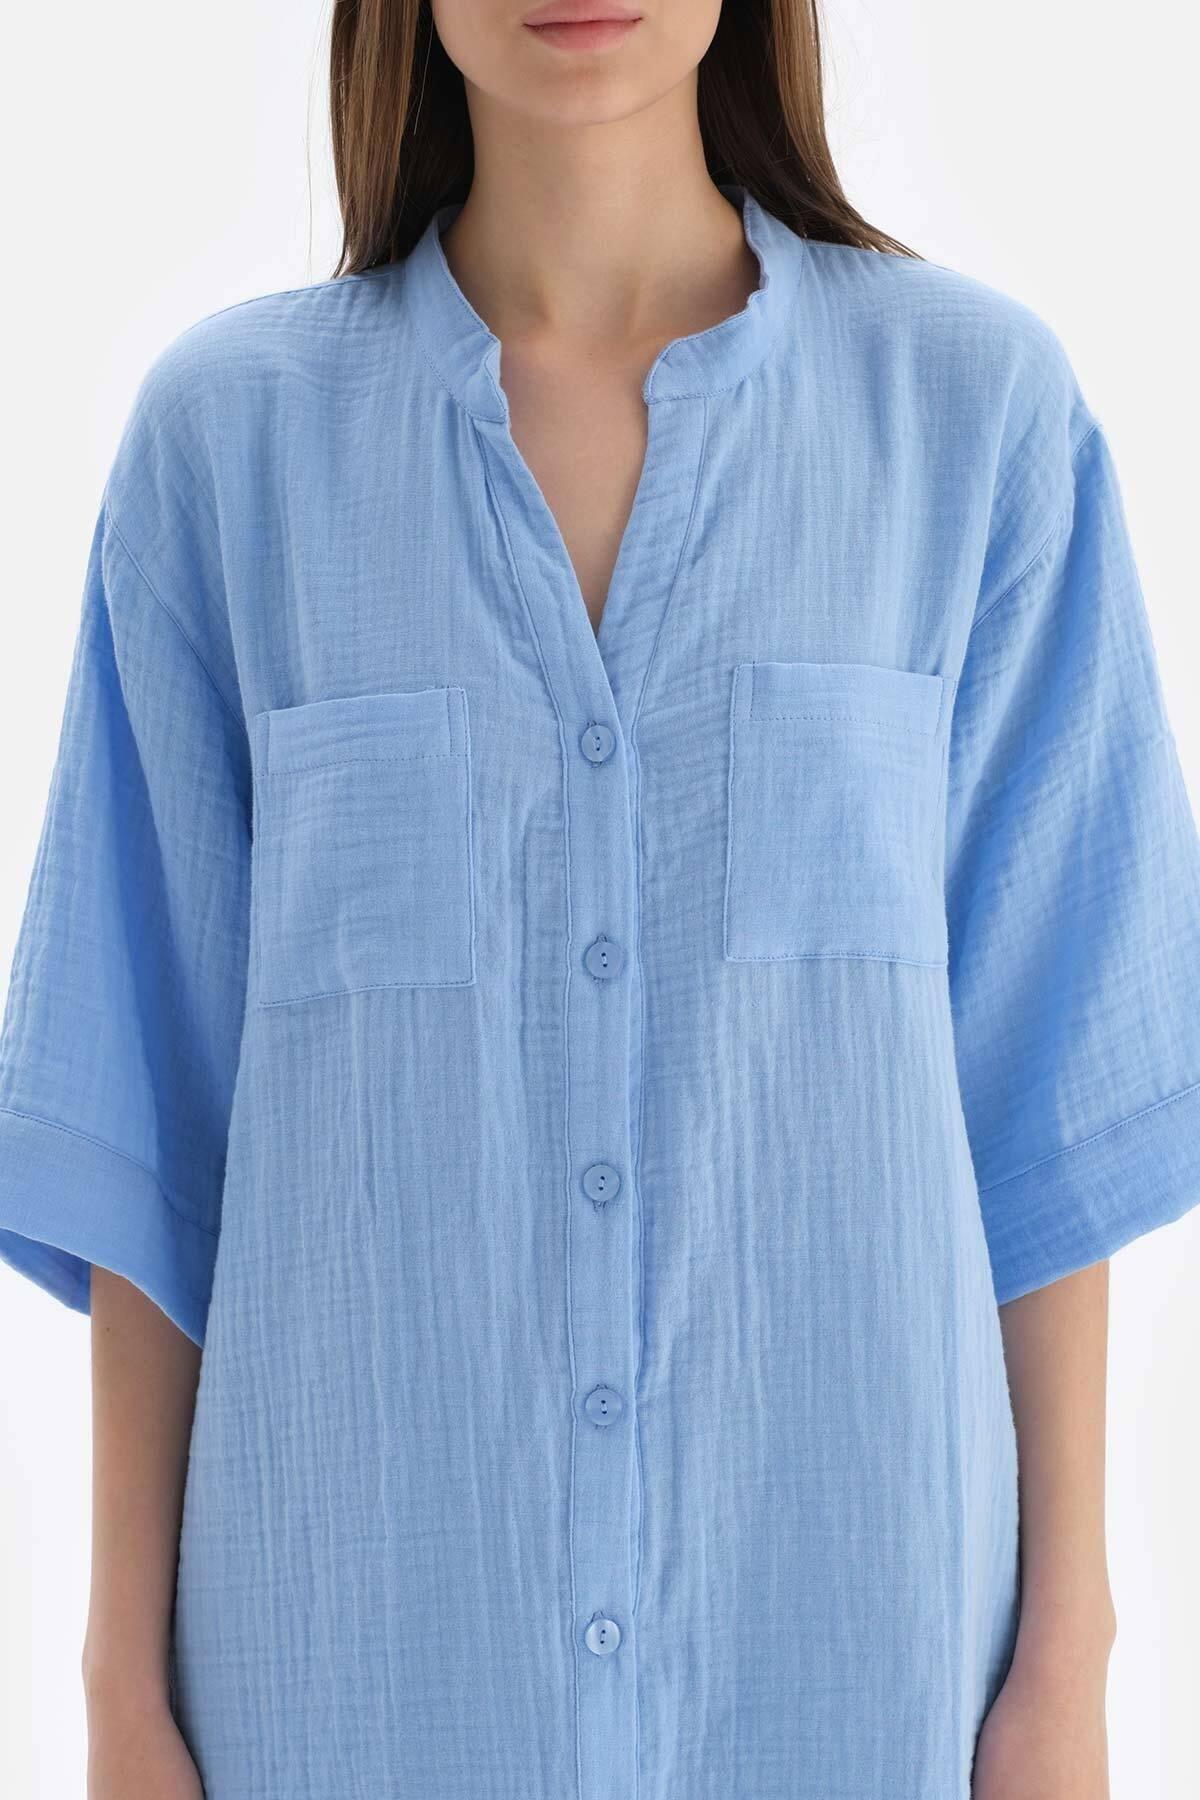 Dagi - Blue Muslin Shirt